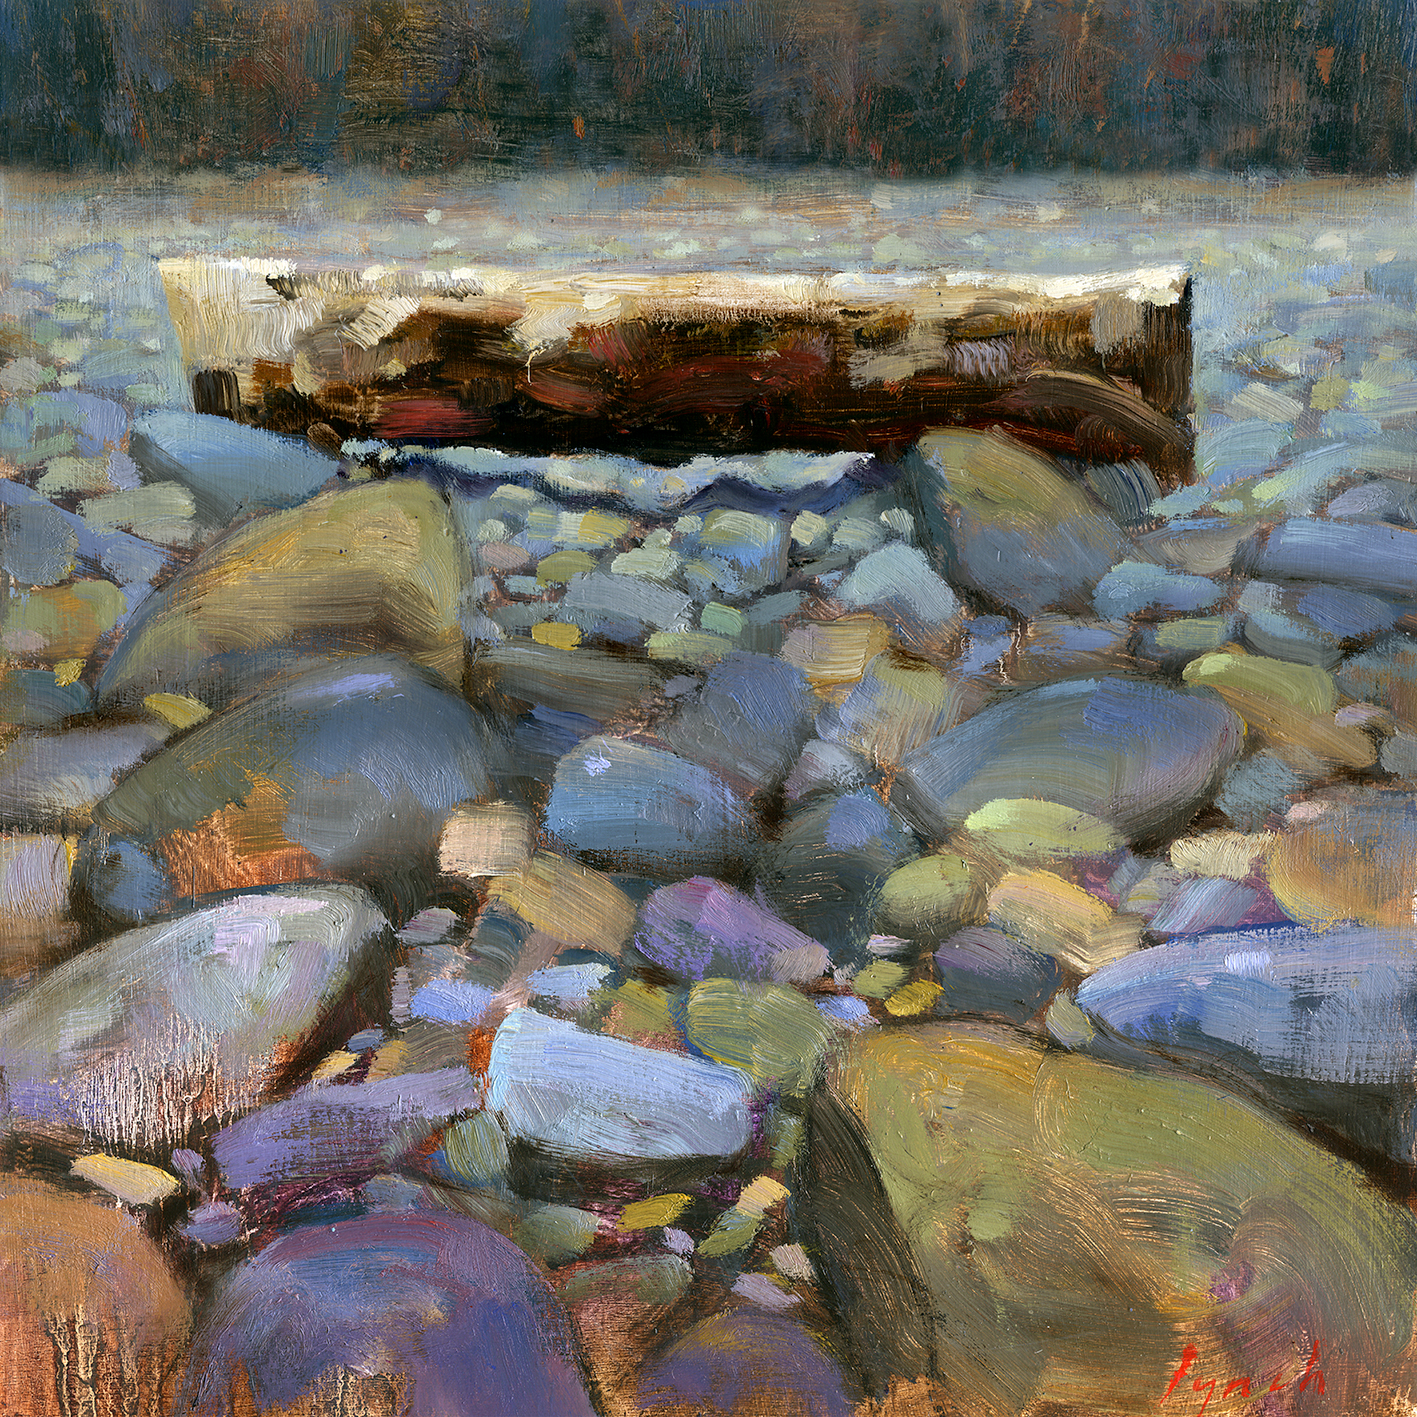 Field study-'Log on Beach'  12 X 12 in. oil on board - The Avenue Gallery